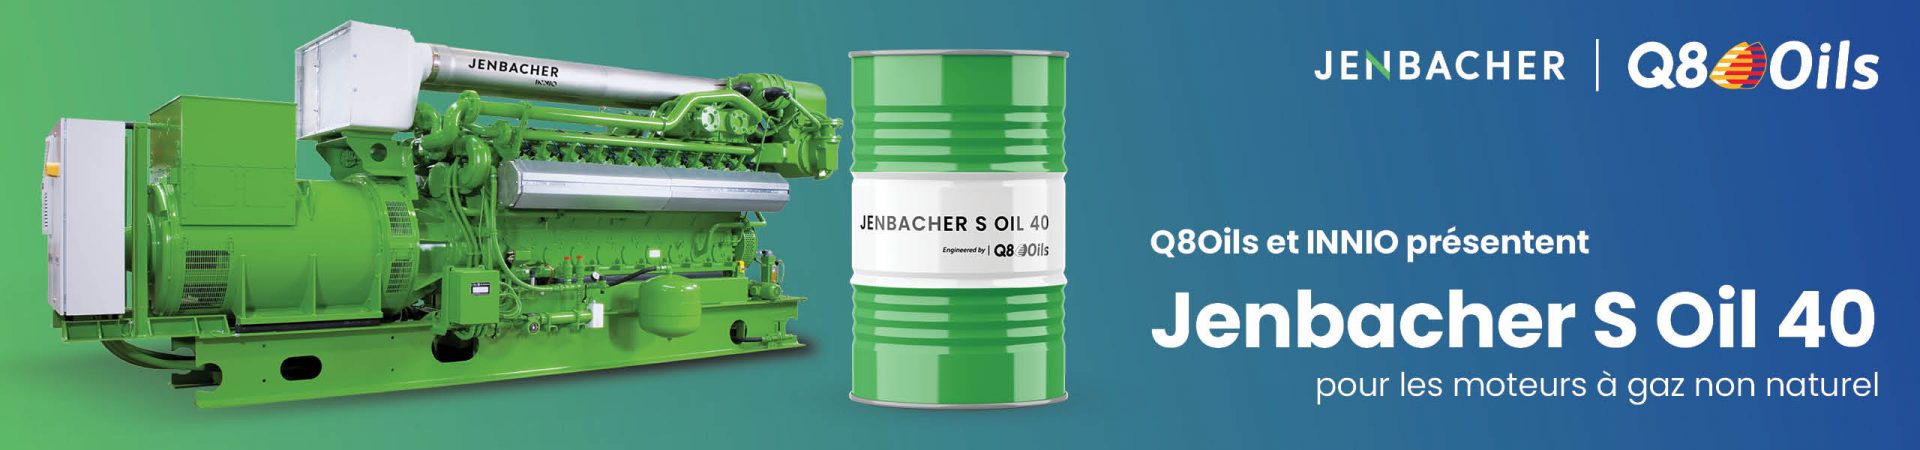 Jenbacher S Oil 40 - FR